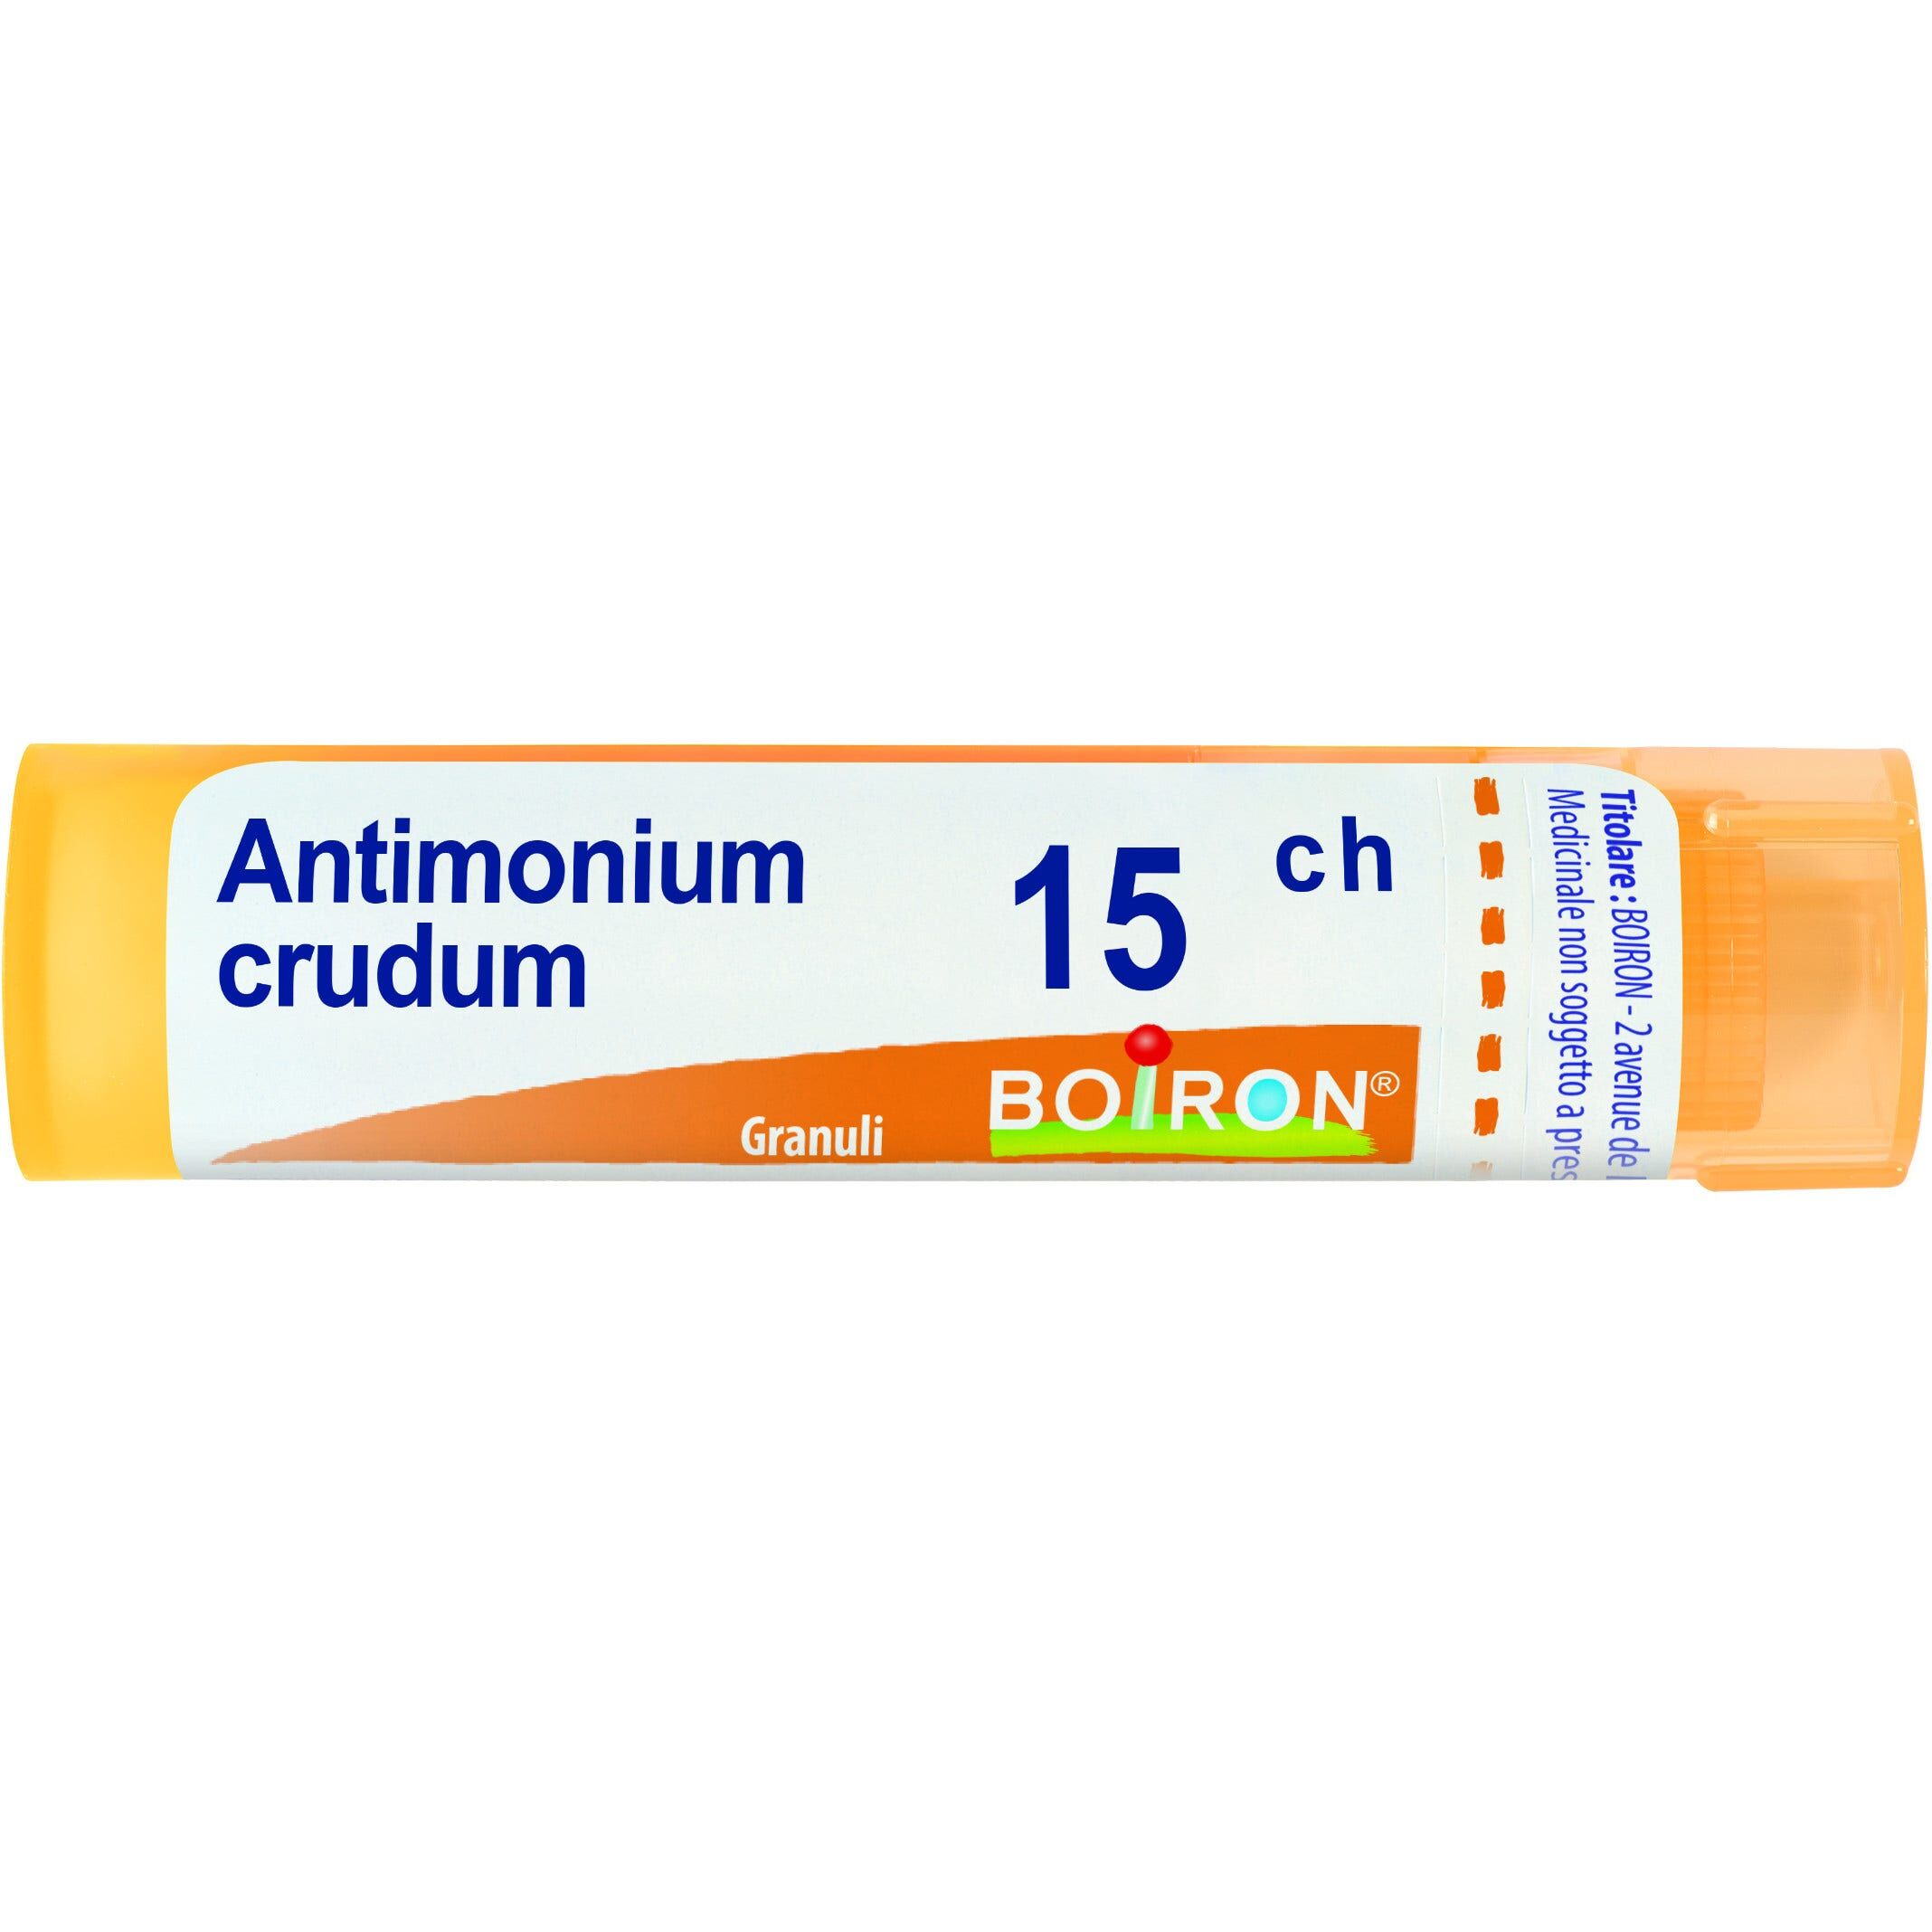 Boiron Antimonium Crudum 15 Ch 80 Gr 4 G